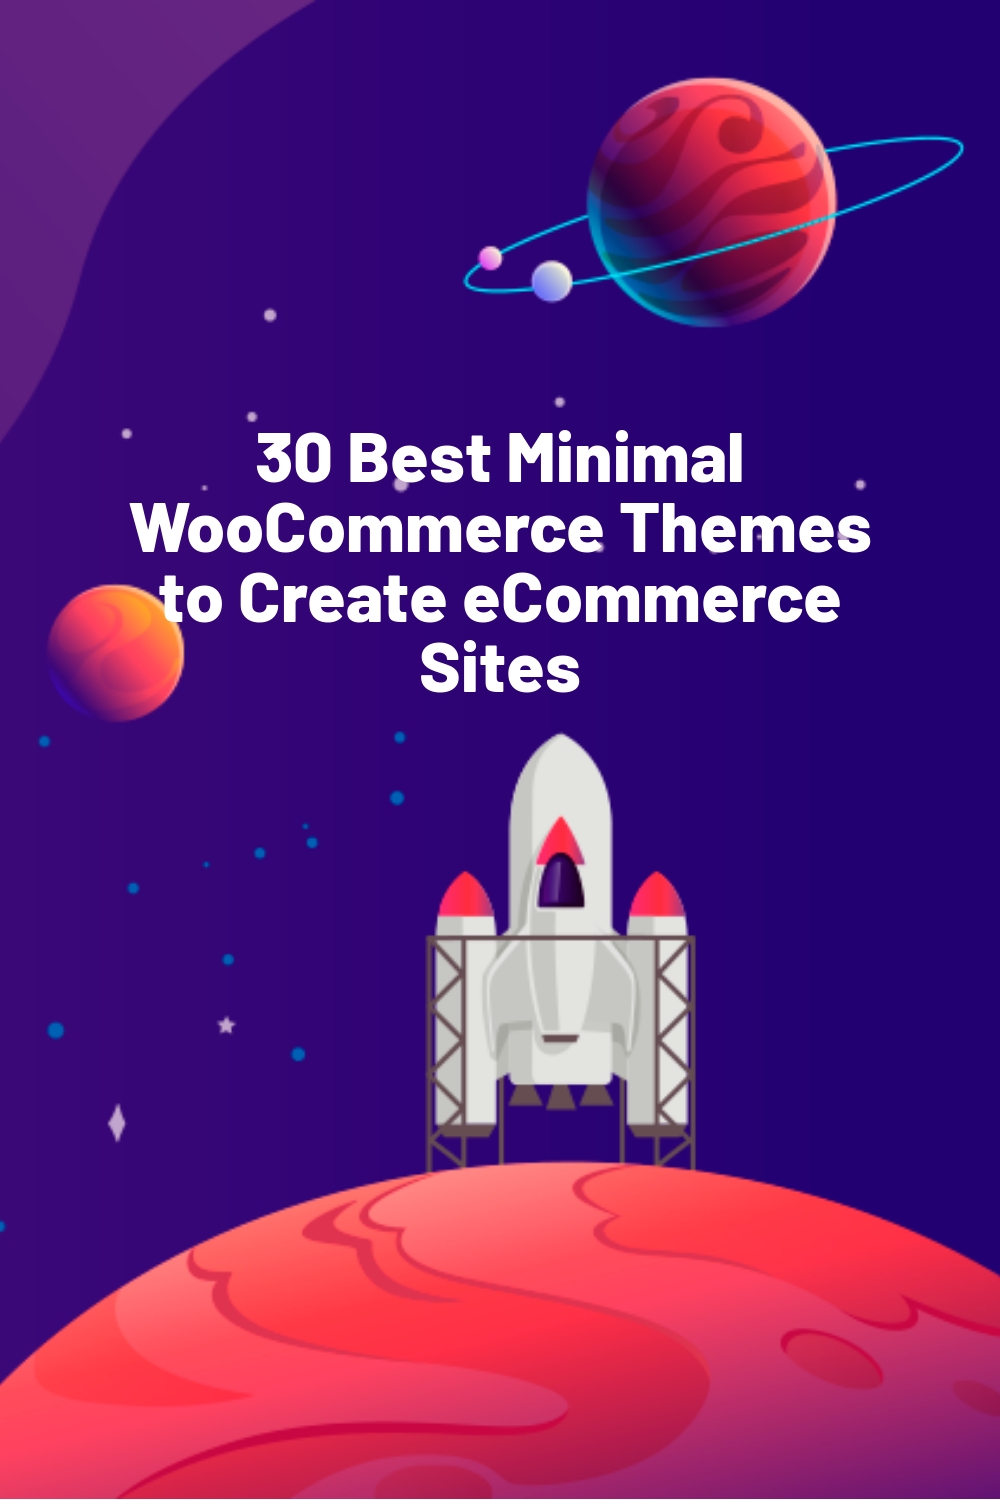 30 Best Minimal WooCommerce Themes to Create eCommerce Sites